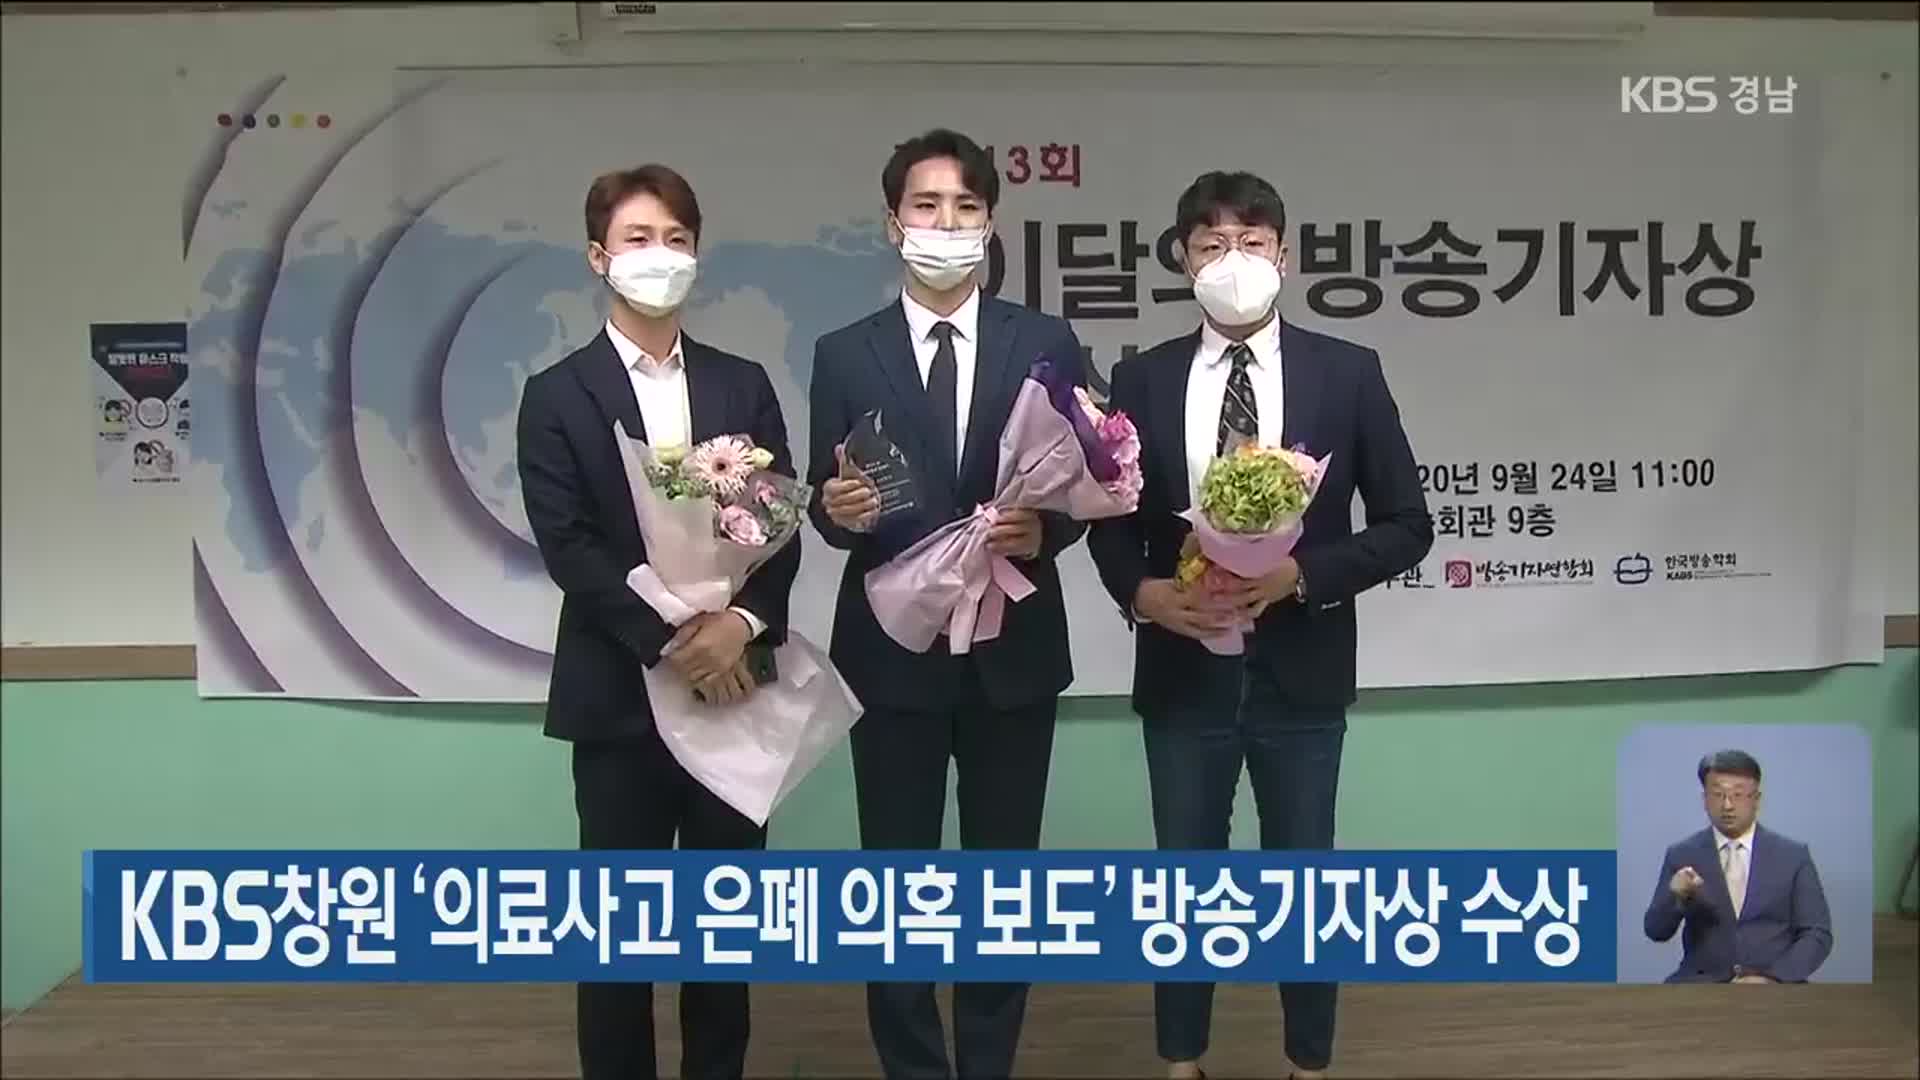 KBS창원 ‘의료사고 은폐 의혹 보도’ 방송기자상 수상